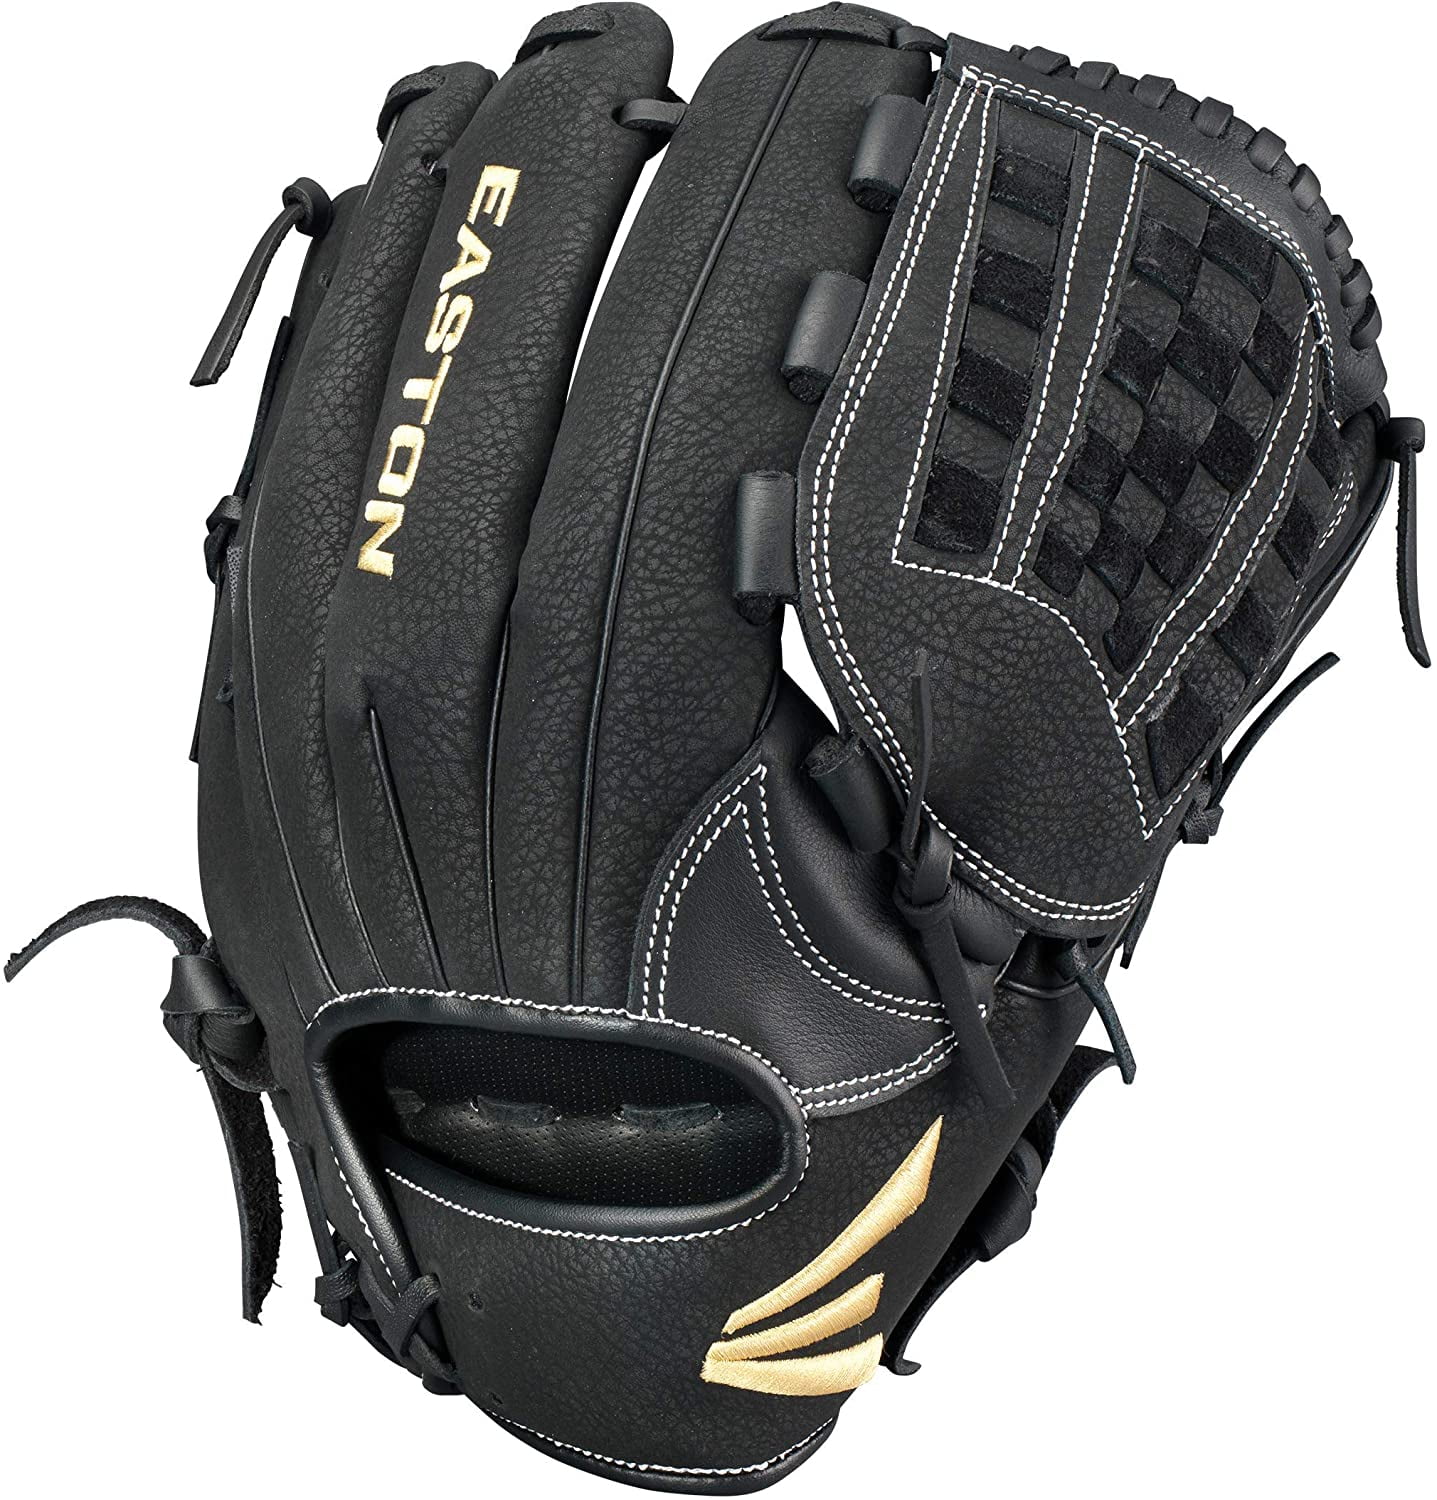 Easton NIF-14 Softball Glove for sale online 